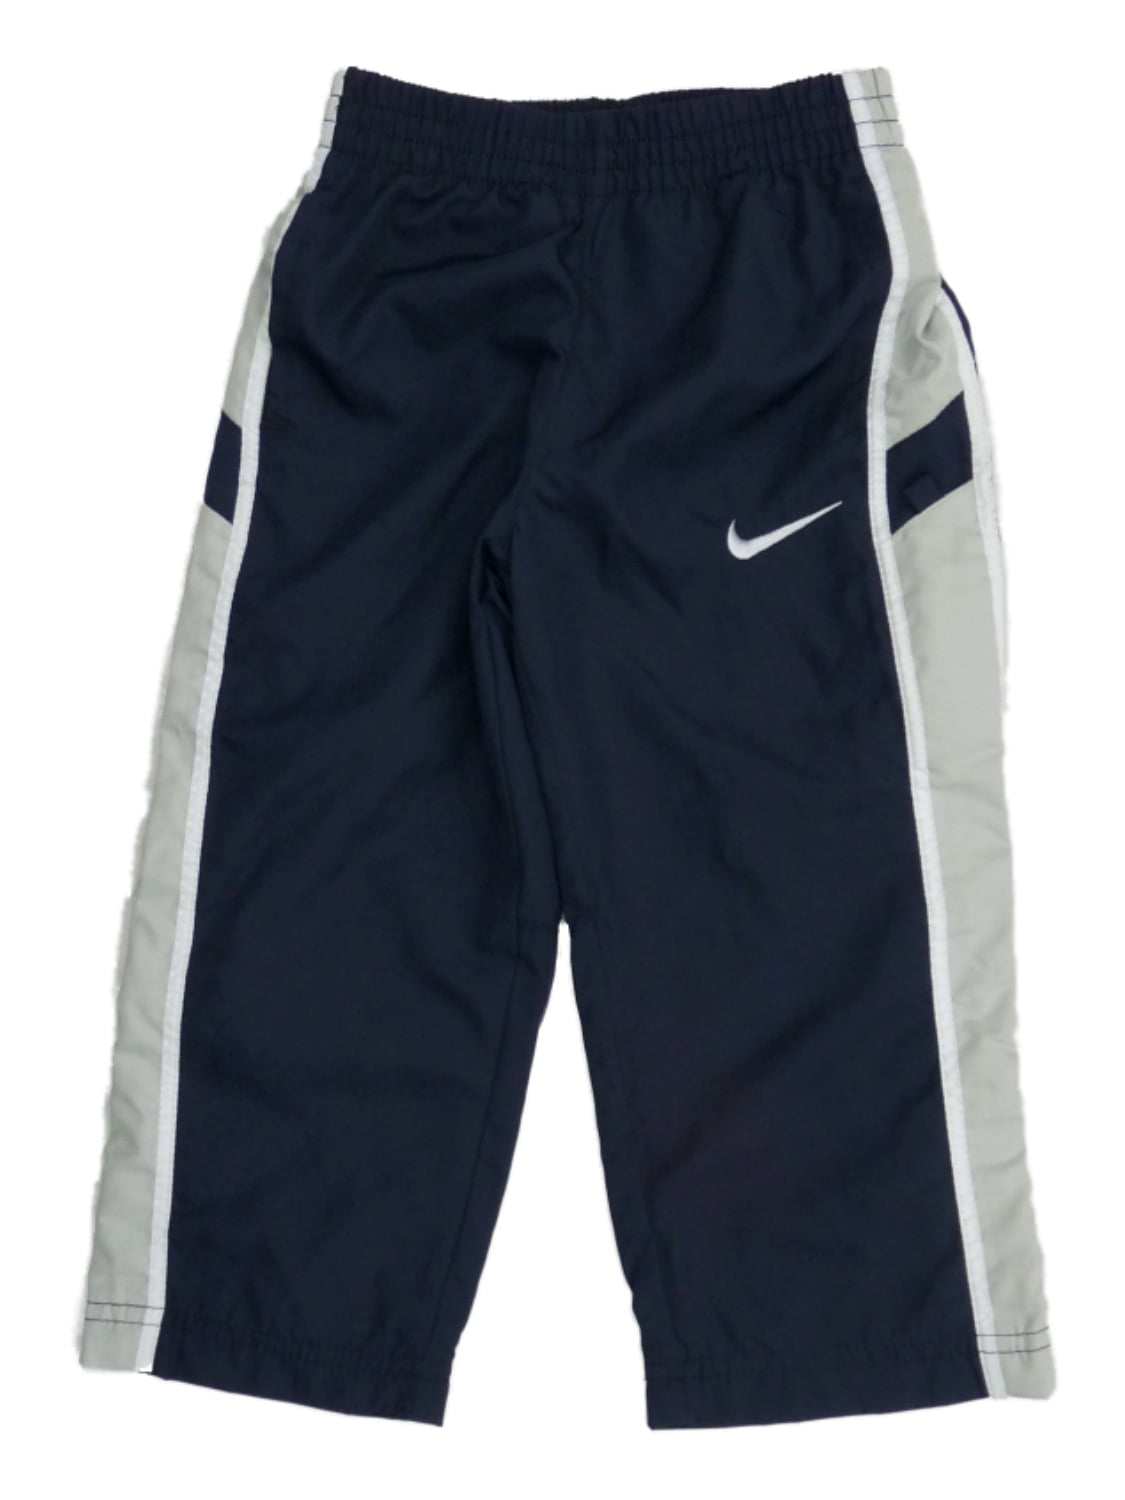 Nike - Nike Toddler Boys Blue Athletic Track Pants 2T - Walmart.com ...